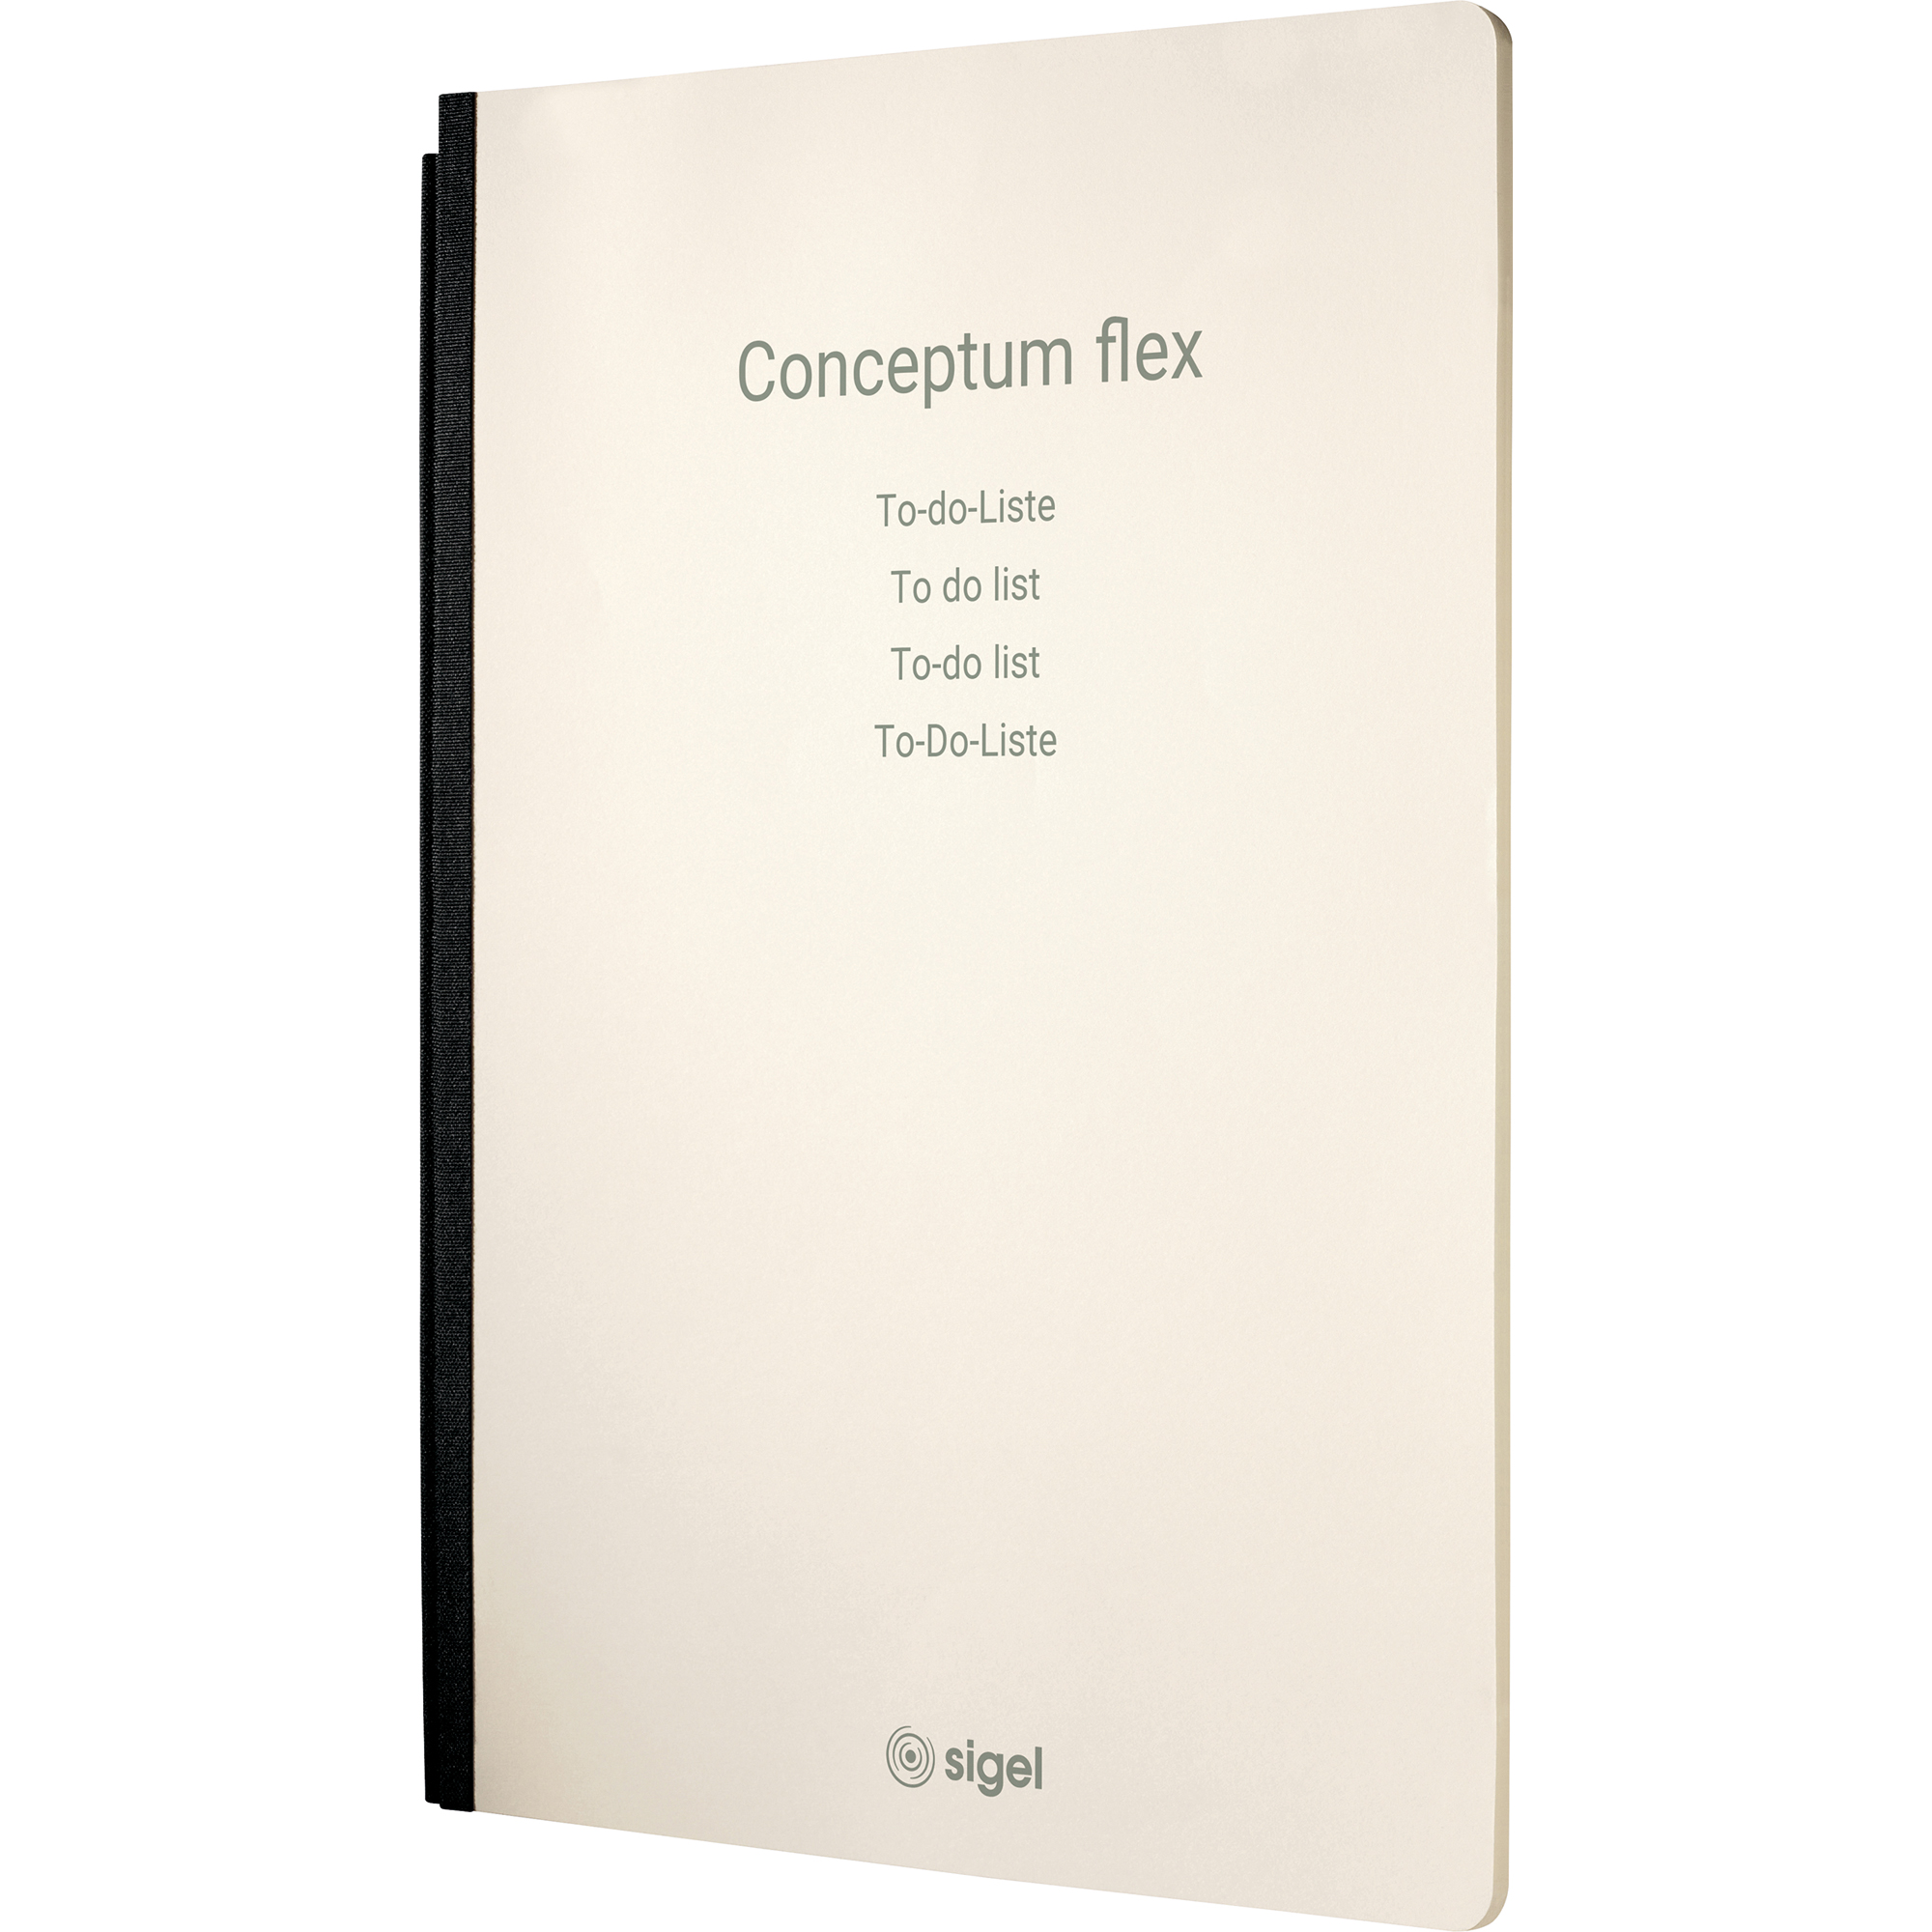 SIGEL Notizheft Conceptum flex A4 To-do